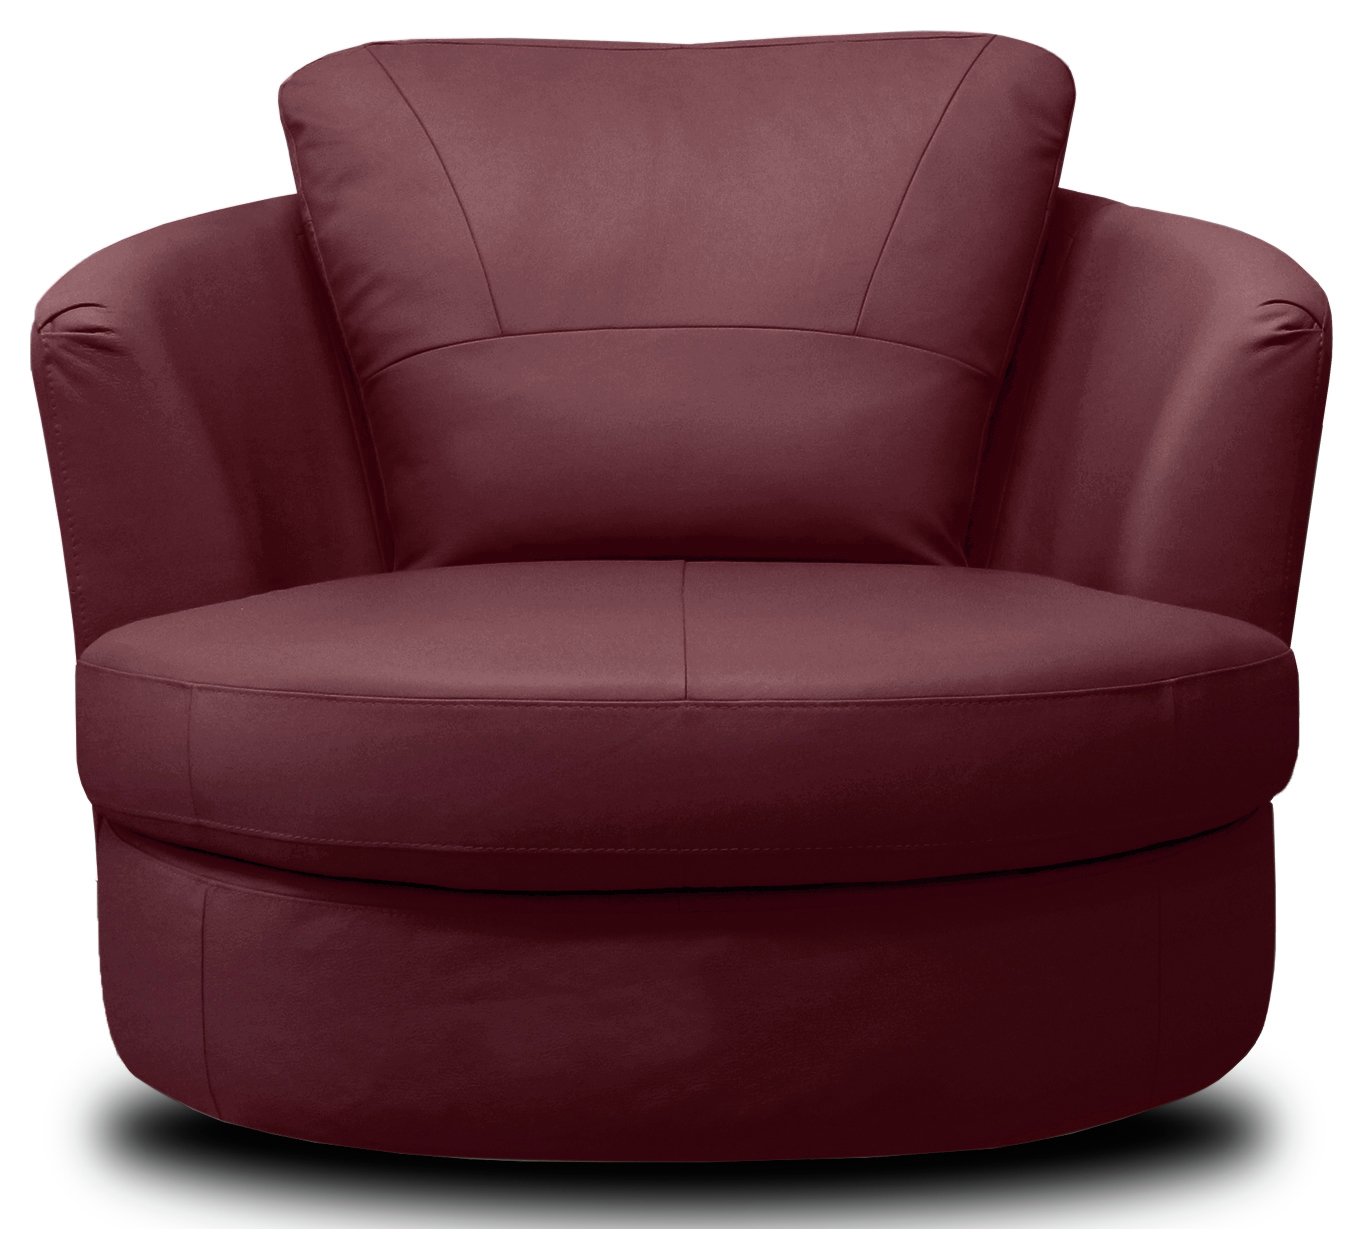 Argos Home Milano Leather Swivel Chair - Burgundy